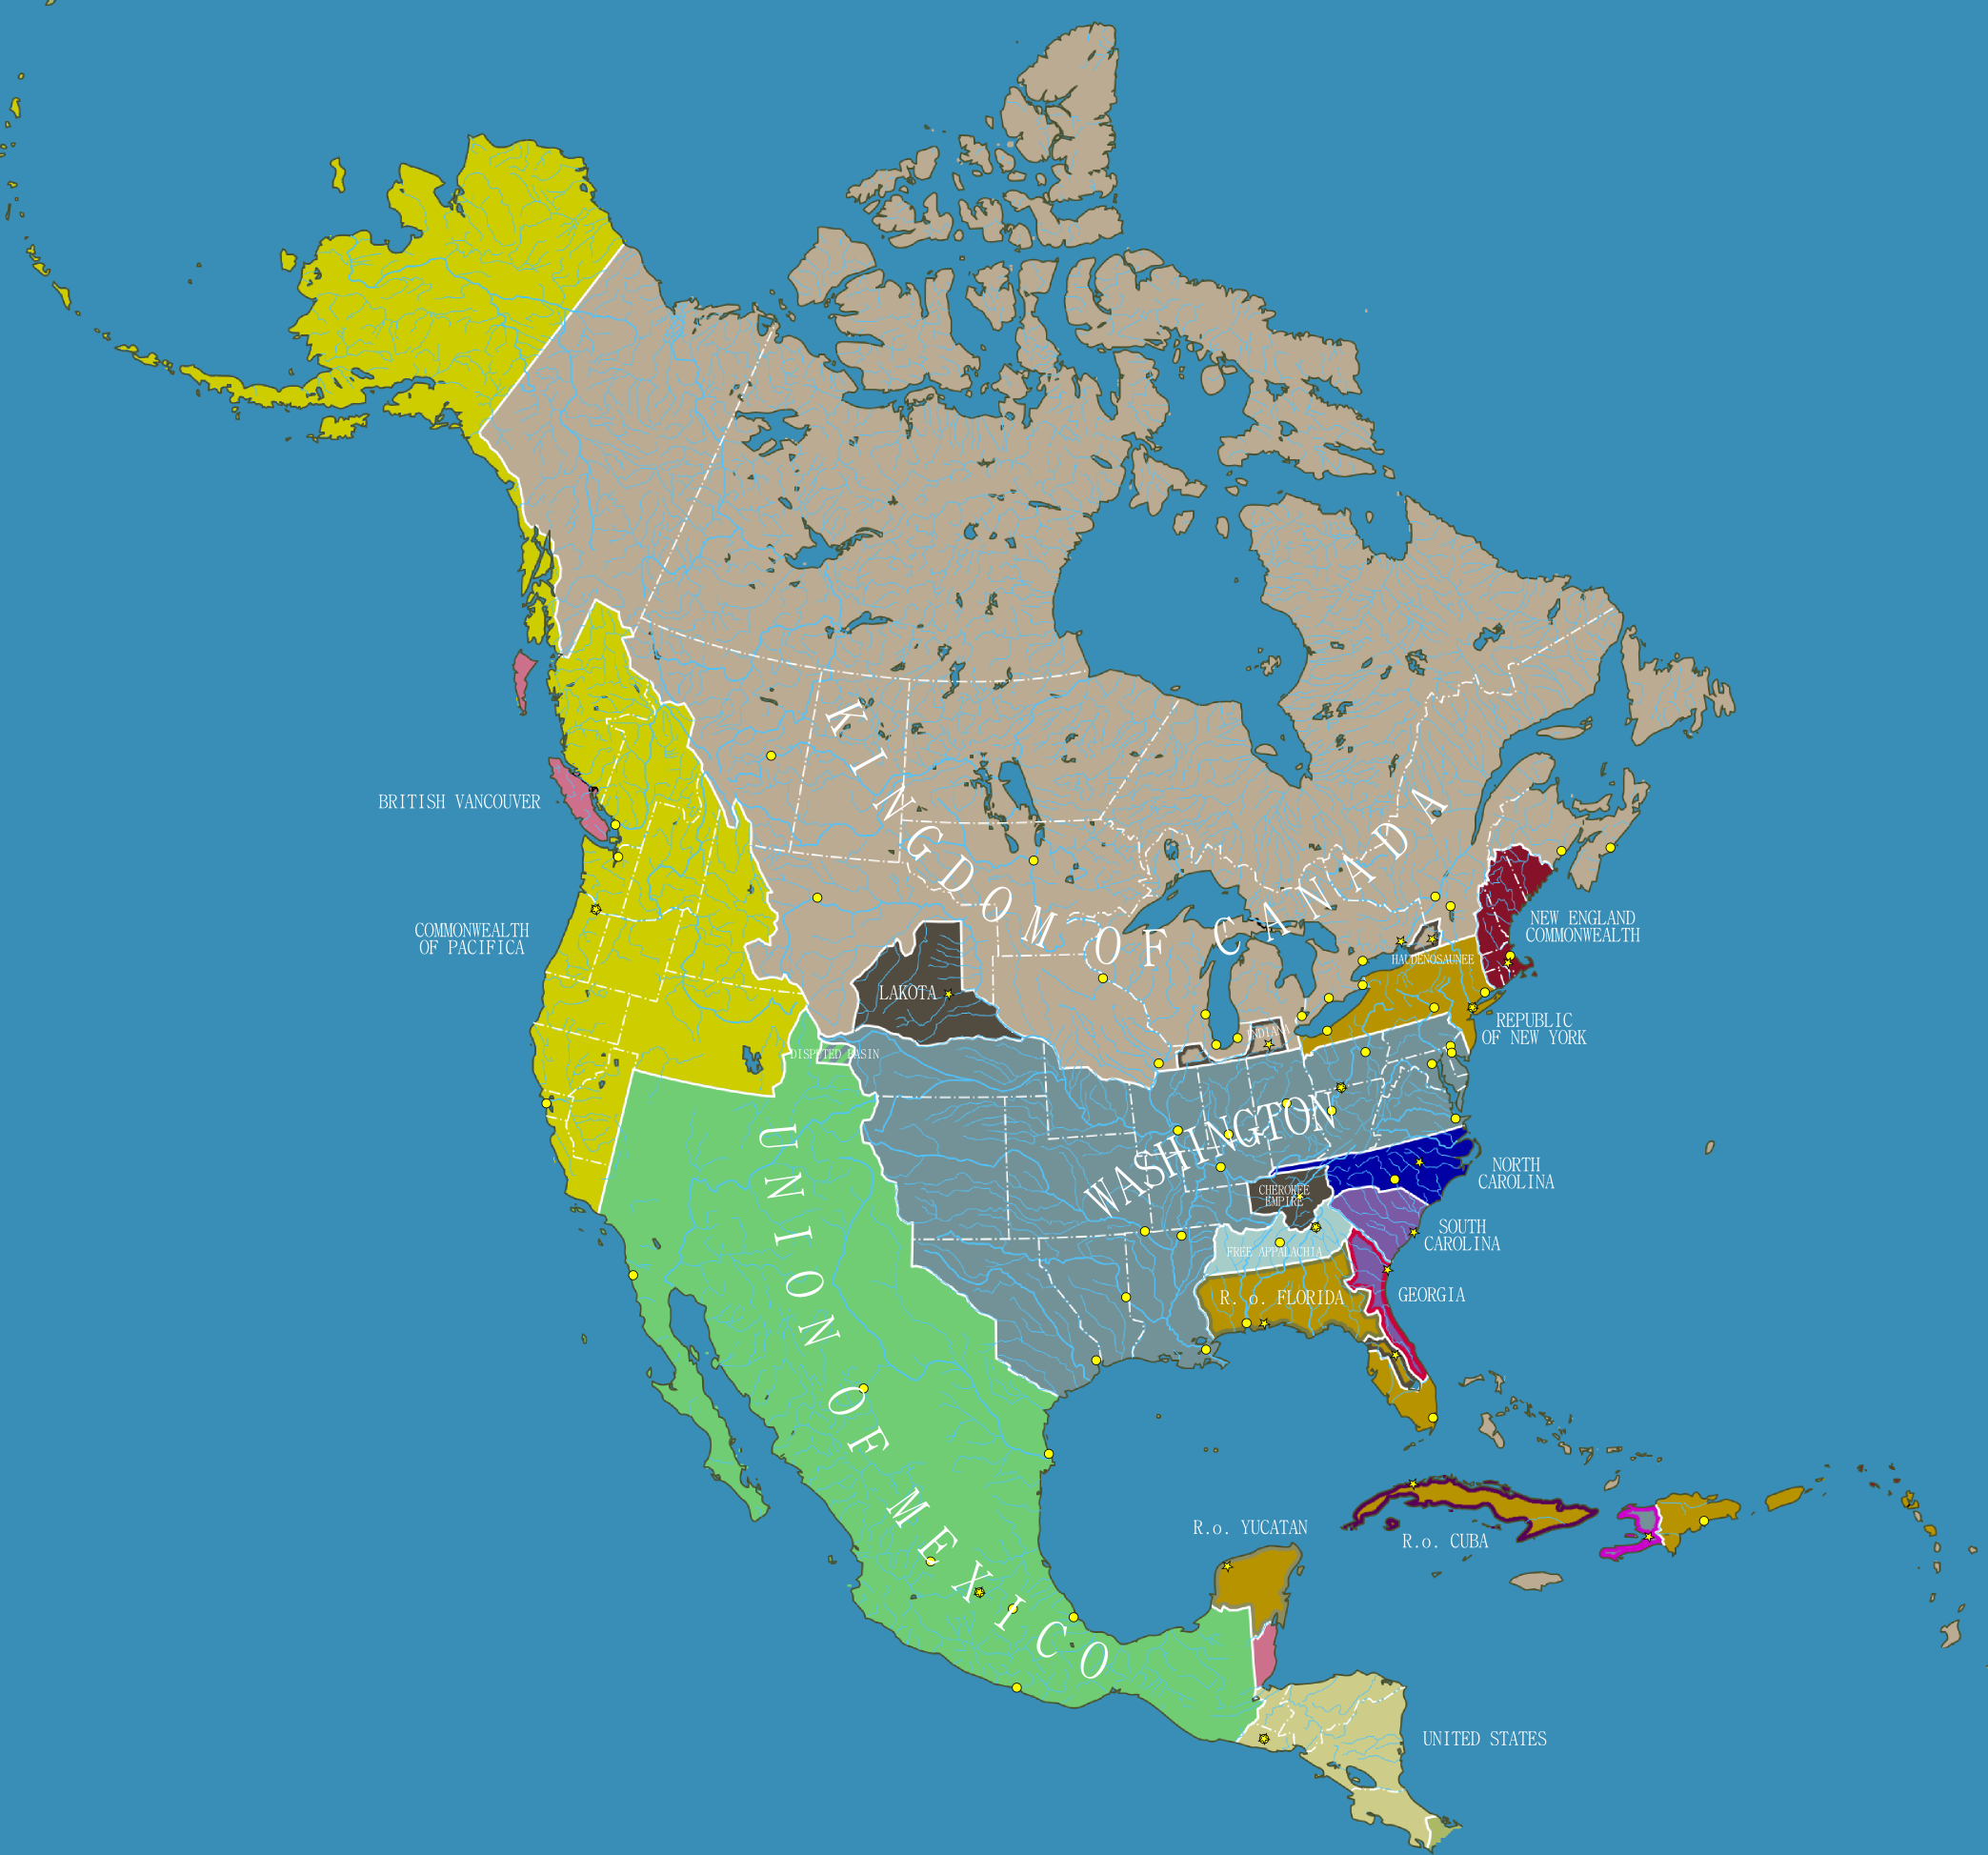 Границы материка Северная Америка. США на карте Северной Америки. Материк Северная Америка на карте со странами. Население материка северная америка народы